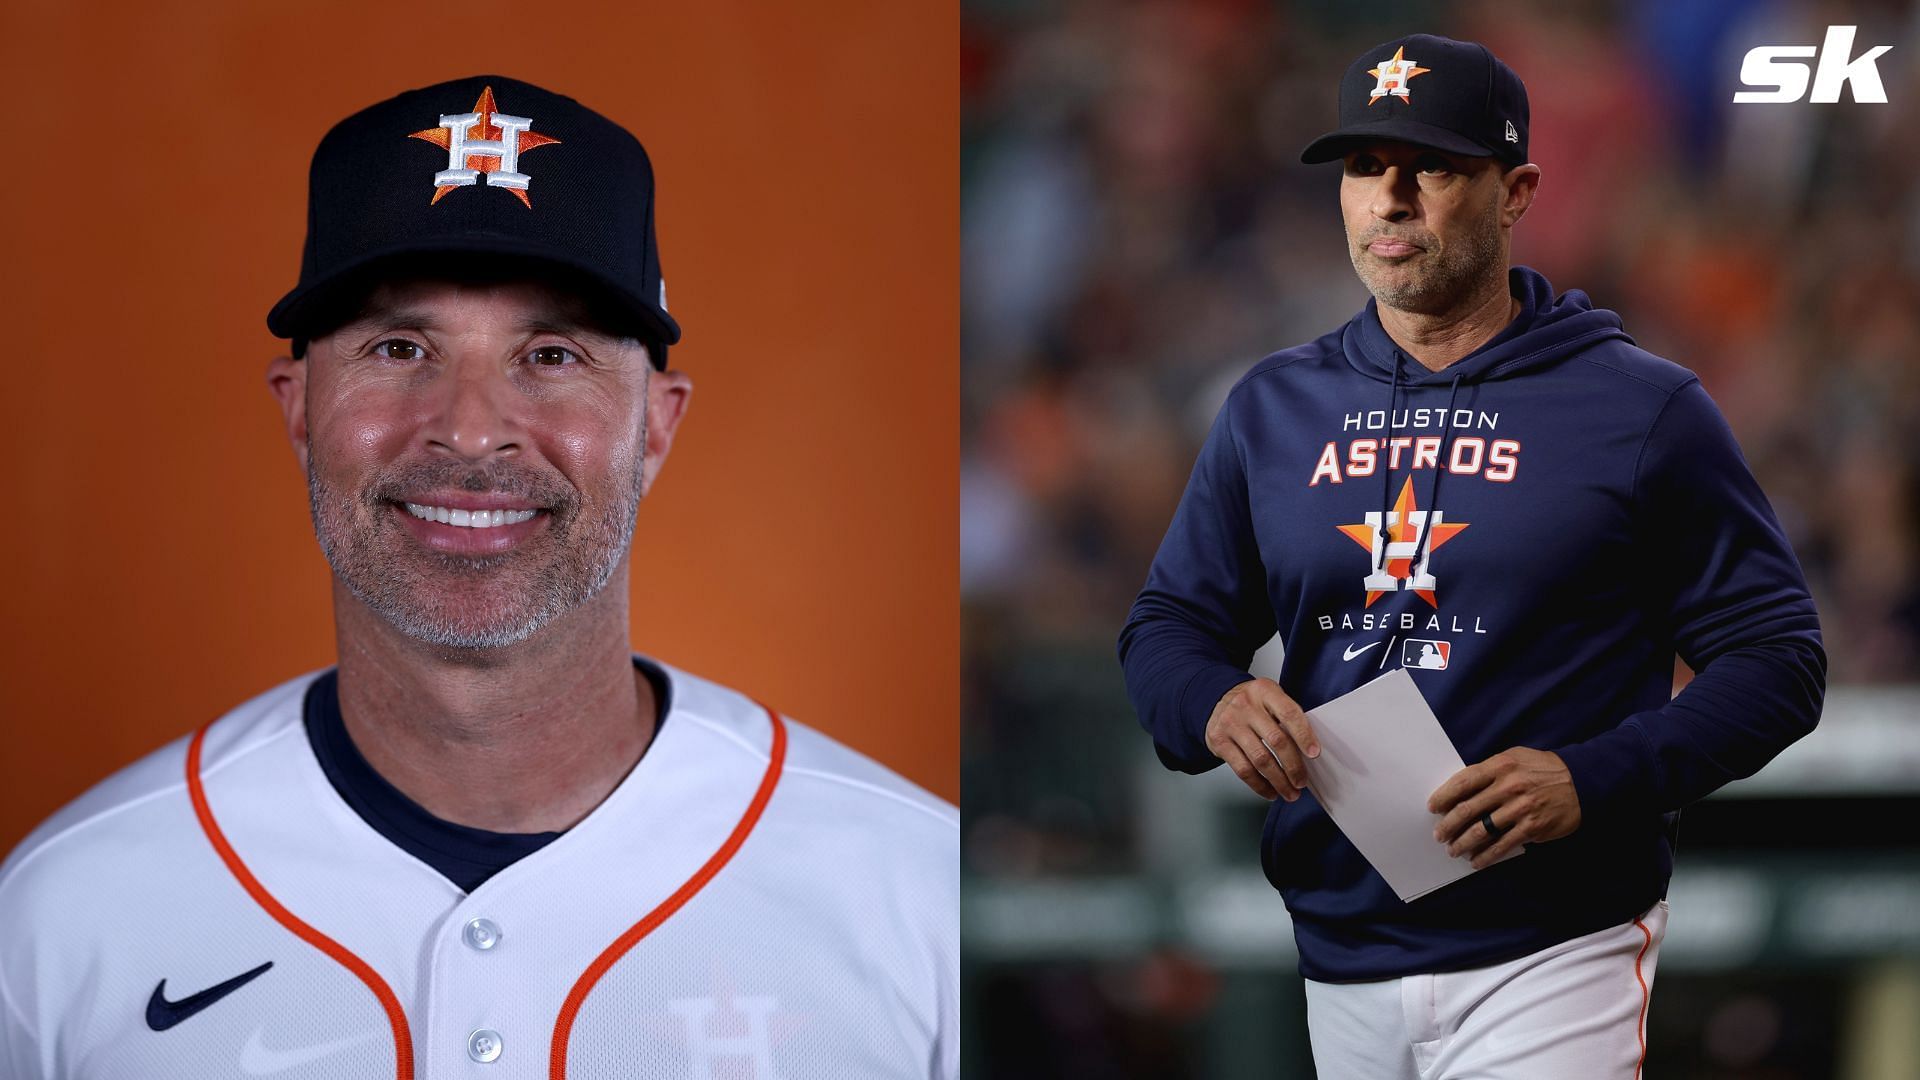 Joe Espada hails Astros fans following Houston reunion. 